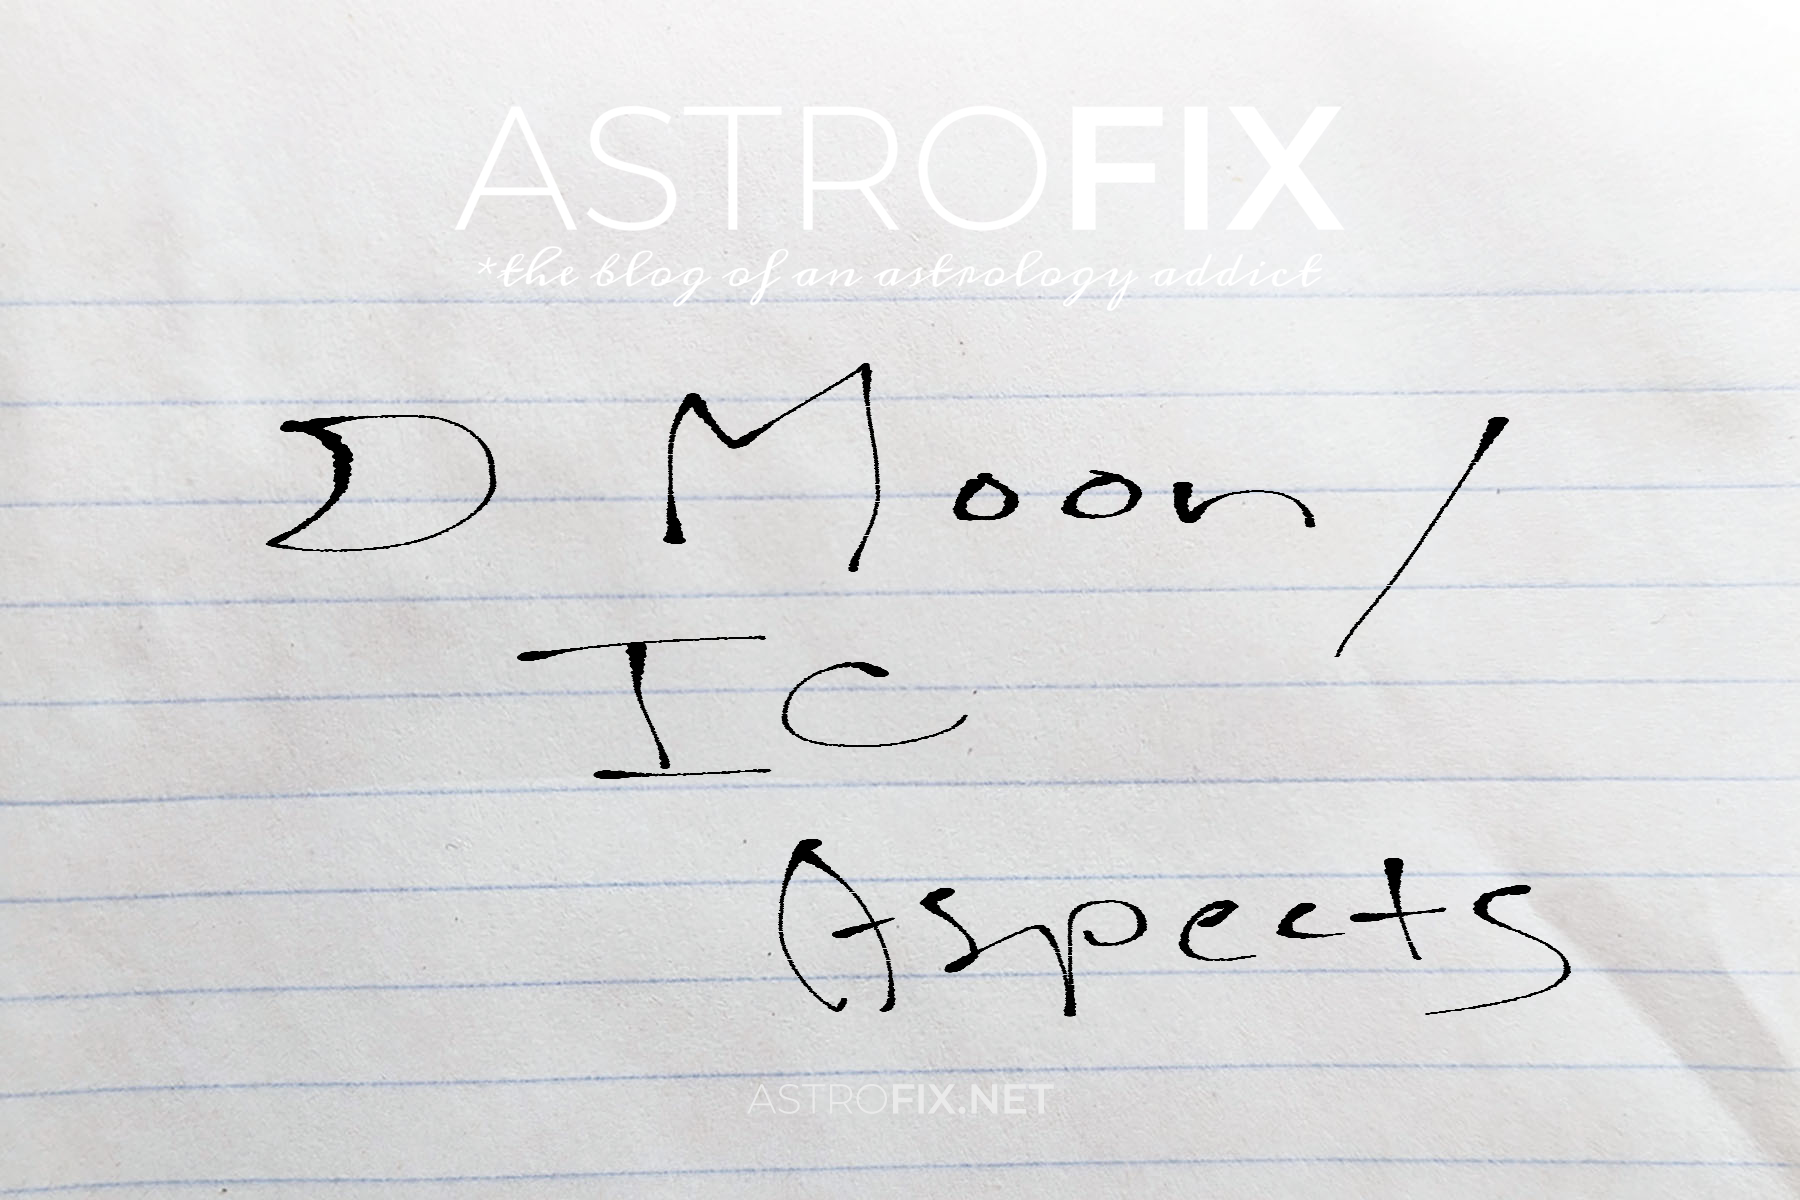 brainstorm-moon-ic-astrology-aspects